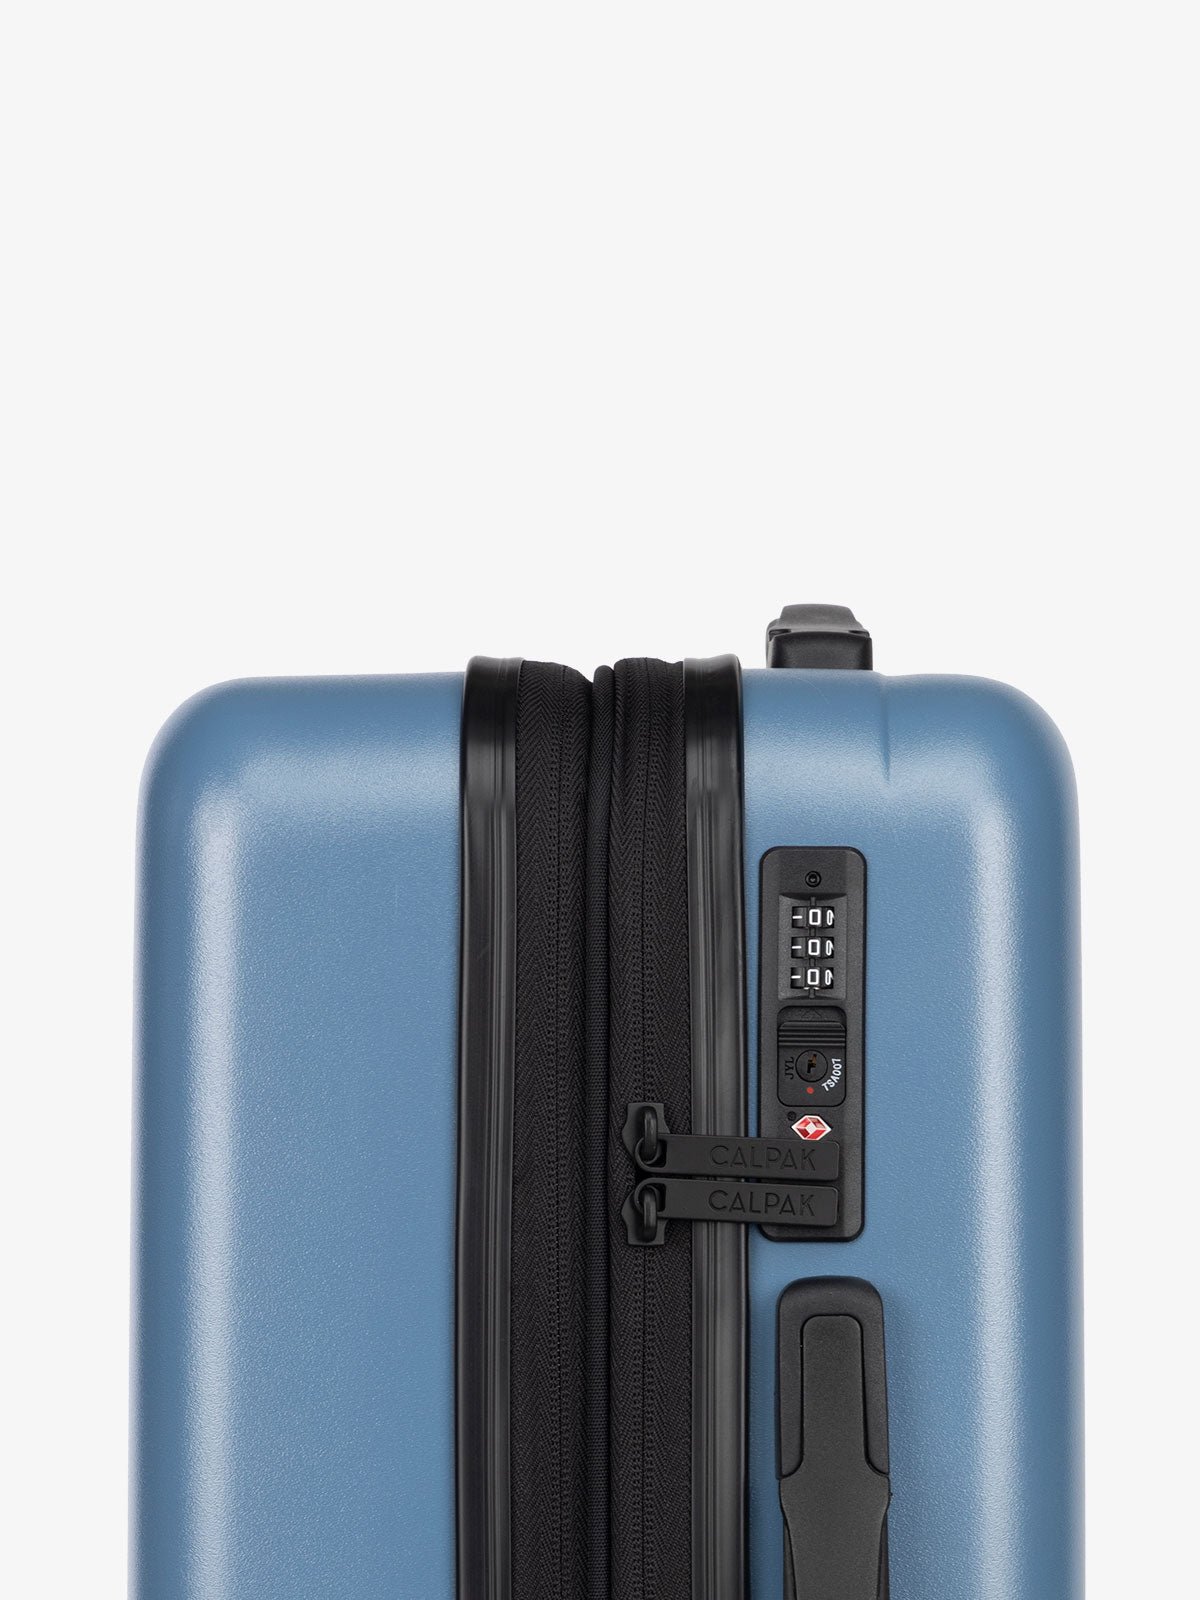 CALPAK Starter Bundle expandable Luggage set with TSA approved Lock in blue